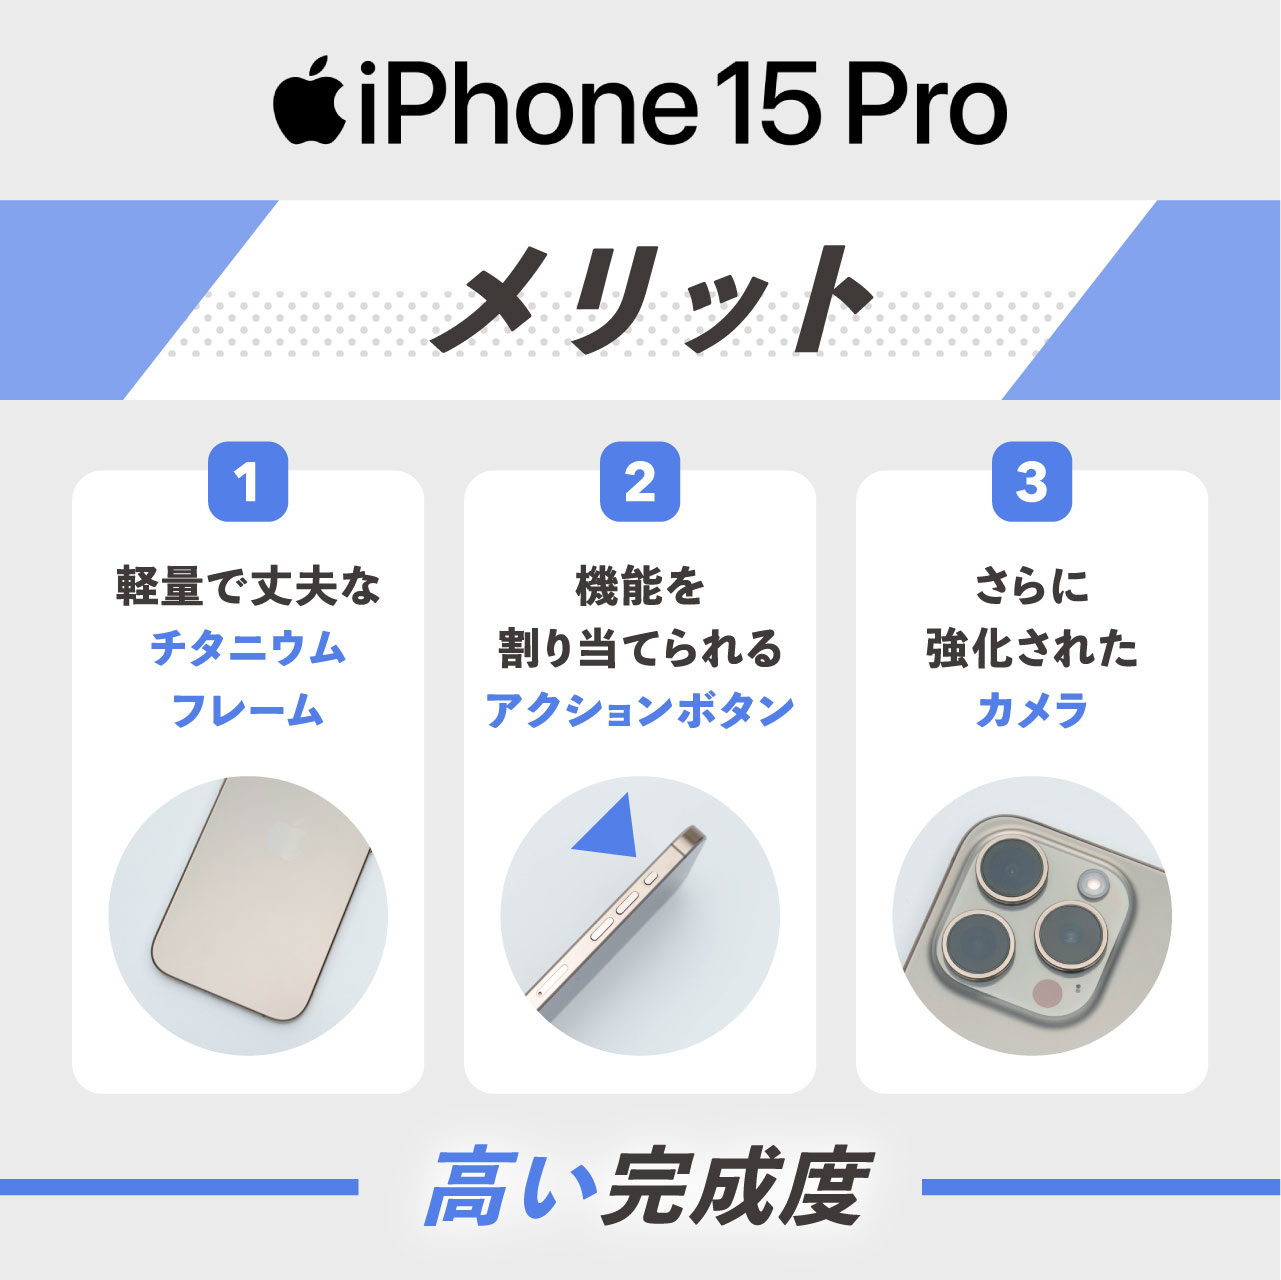 iPhone15 Proのメリット